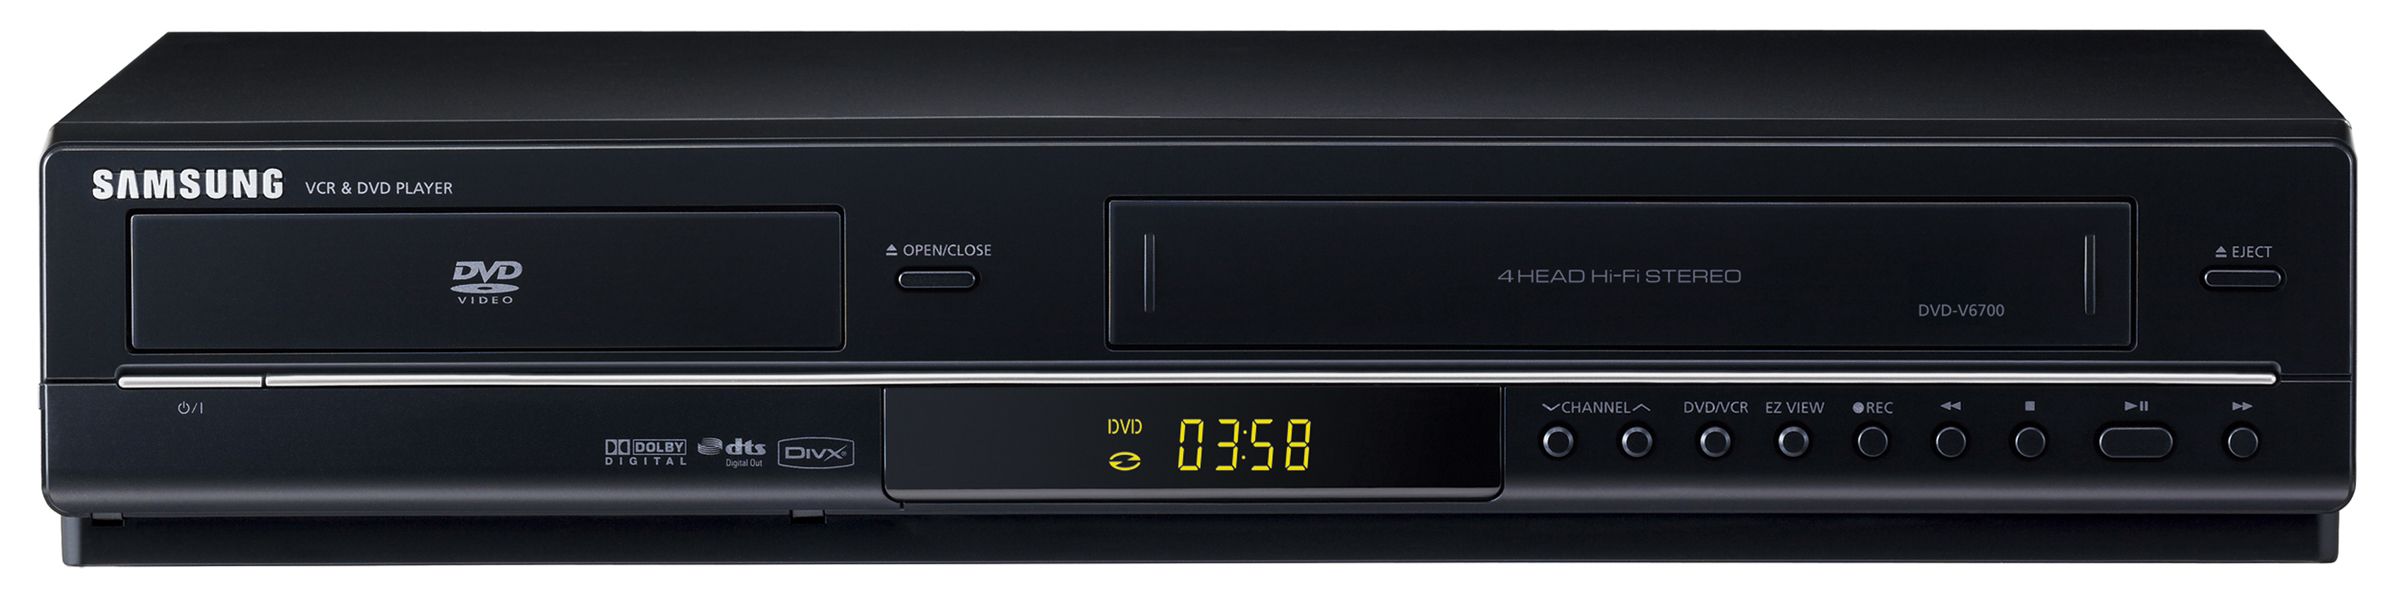 DVD/VCR logo